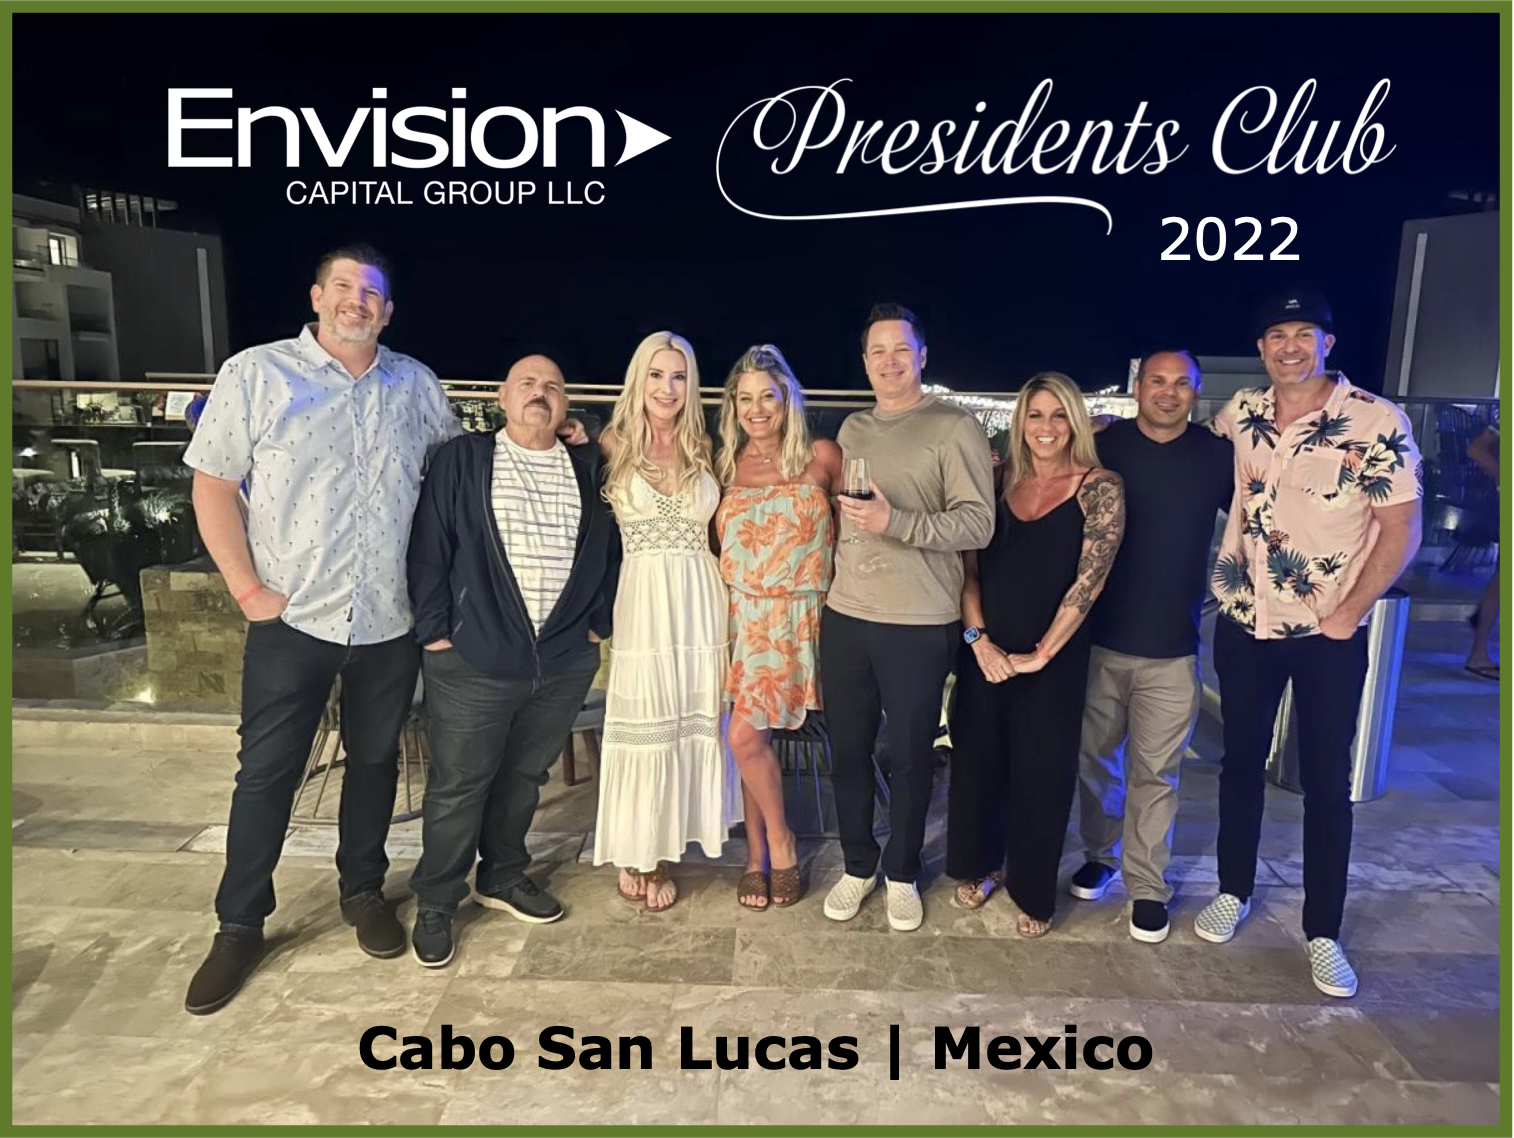 Presidents Club 2022 | Cabo San Lucas - Envision Capital Group